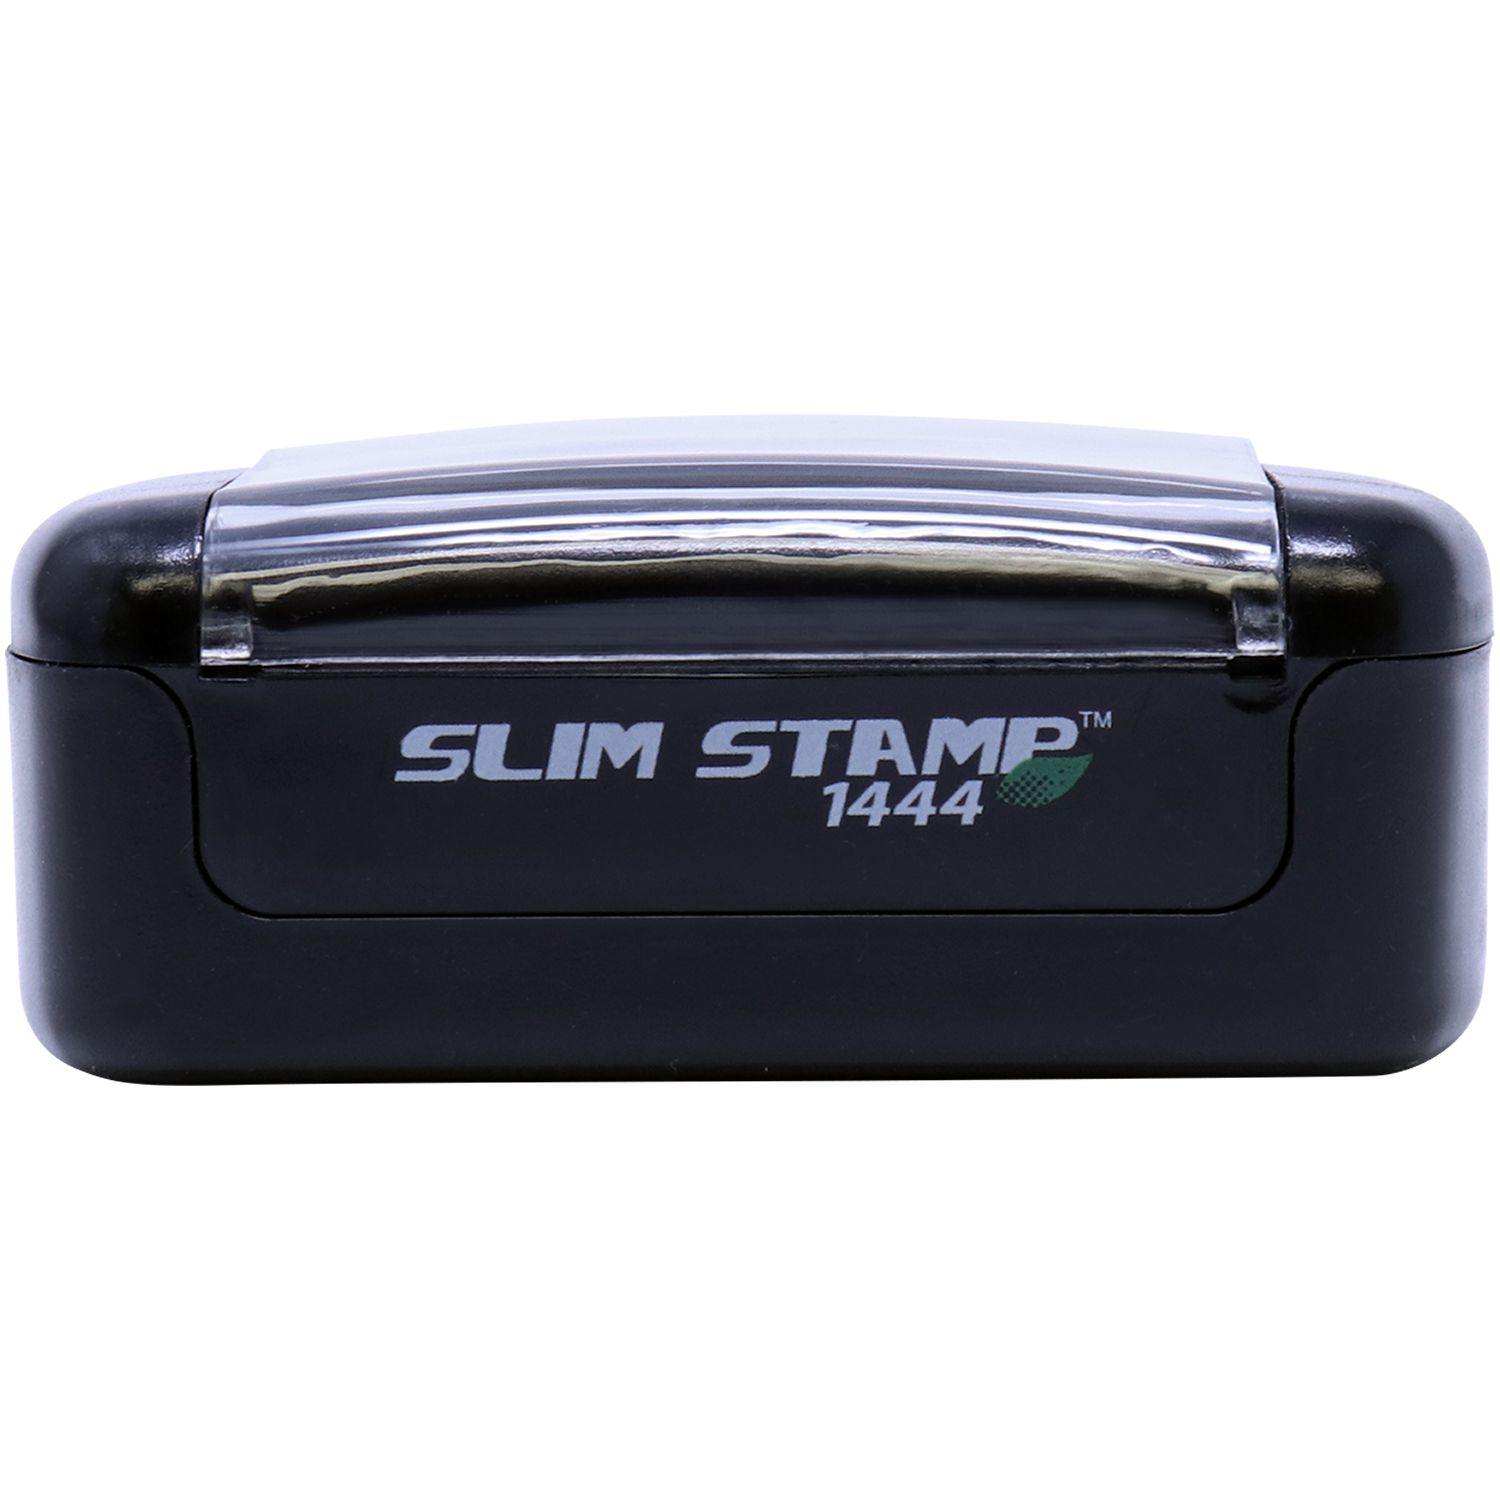 Slim Pre-Inked Cargado Stamp - Engineer Seal Stamps - Brand_Slim, Impression Size_Small, Stamp Type_Pre-Inked Stamp, Type of Use_Office, Type of Use_Postal & Mailing